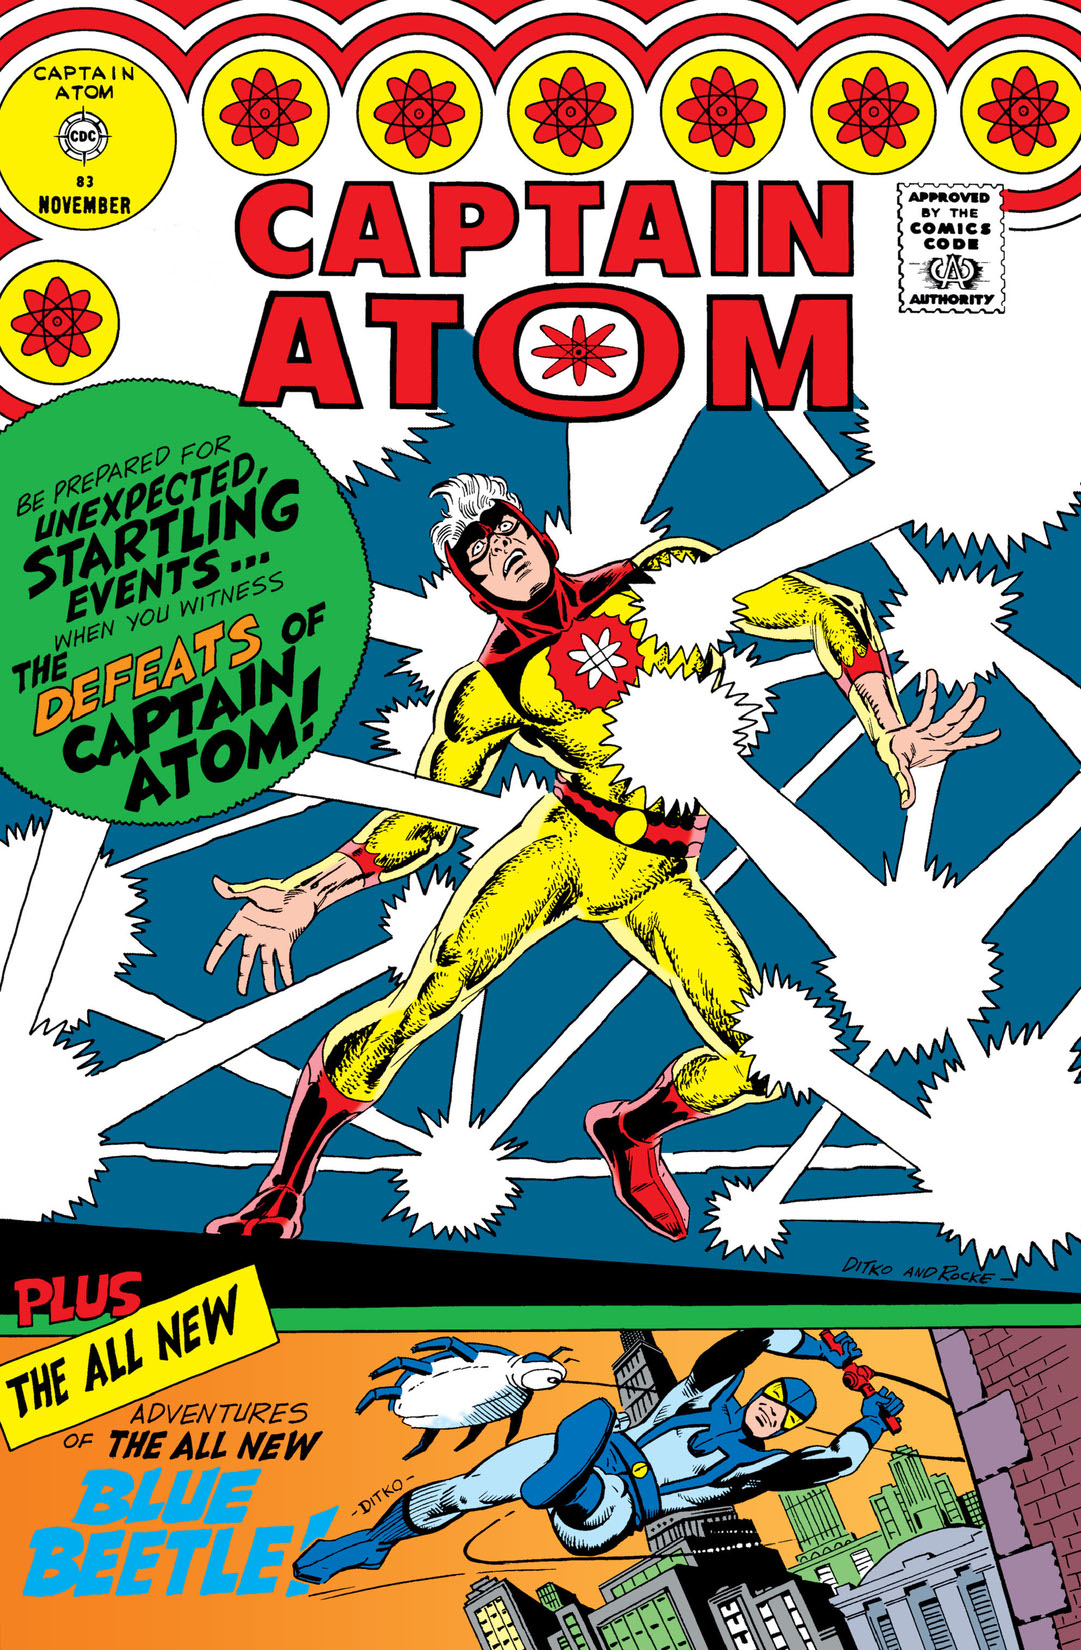 Captain Atom (1965-) #83 preview images